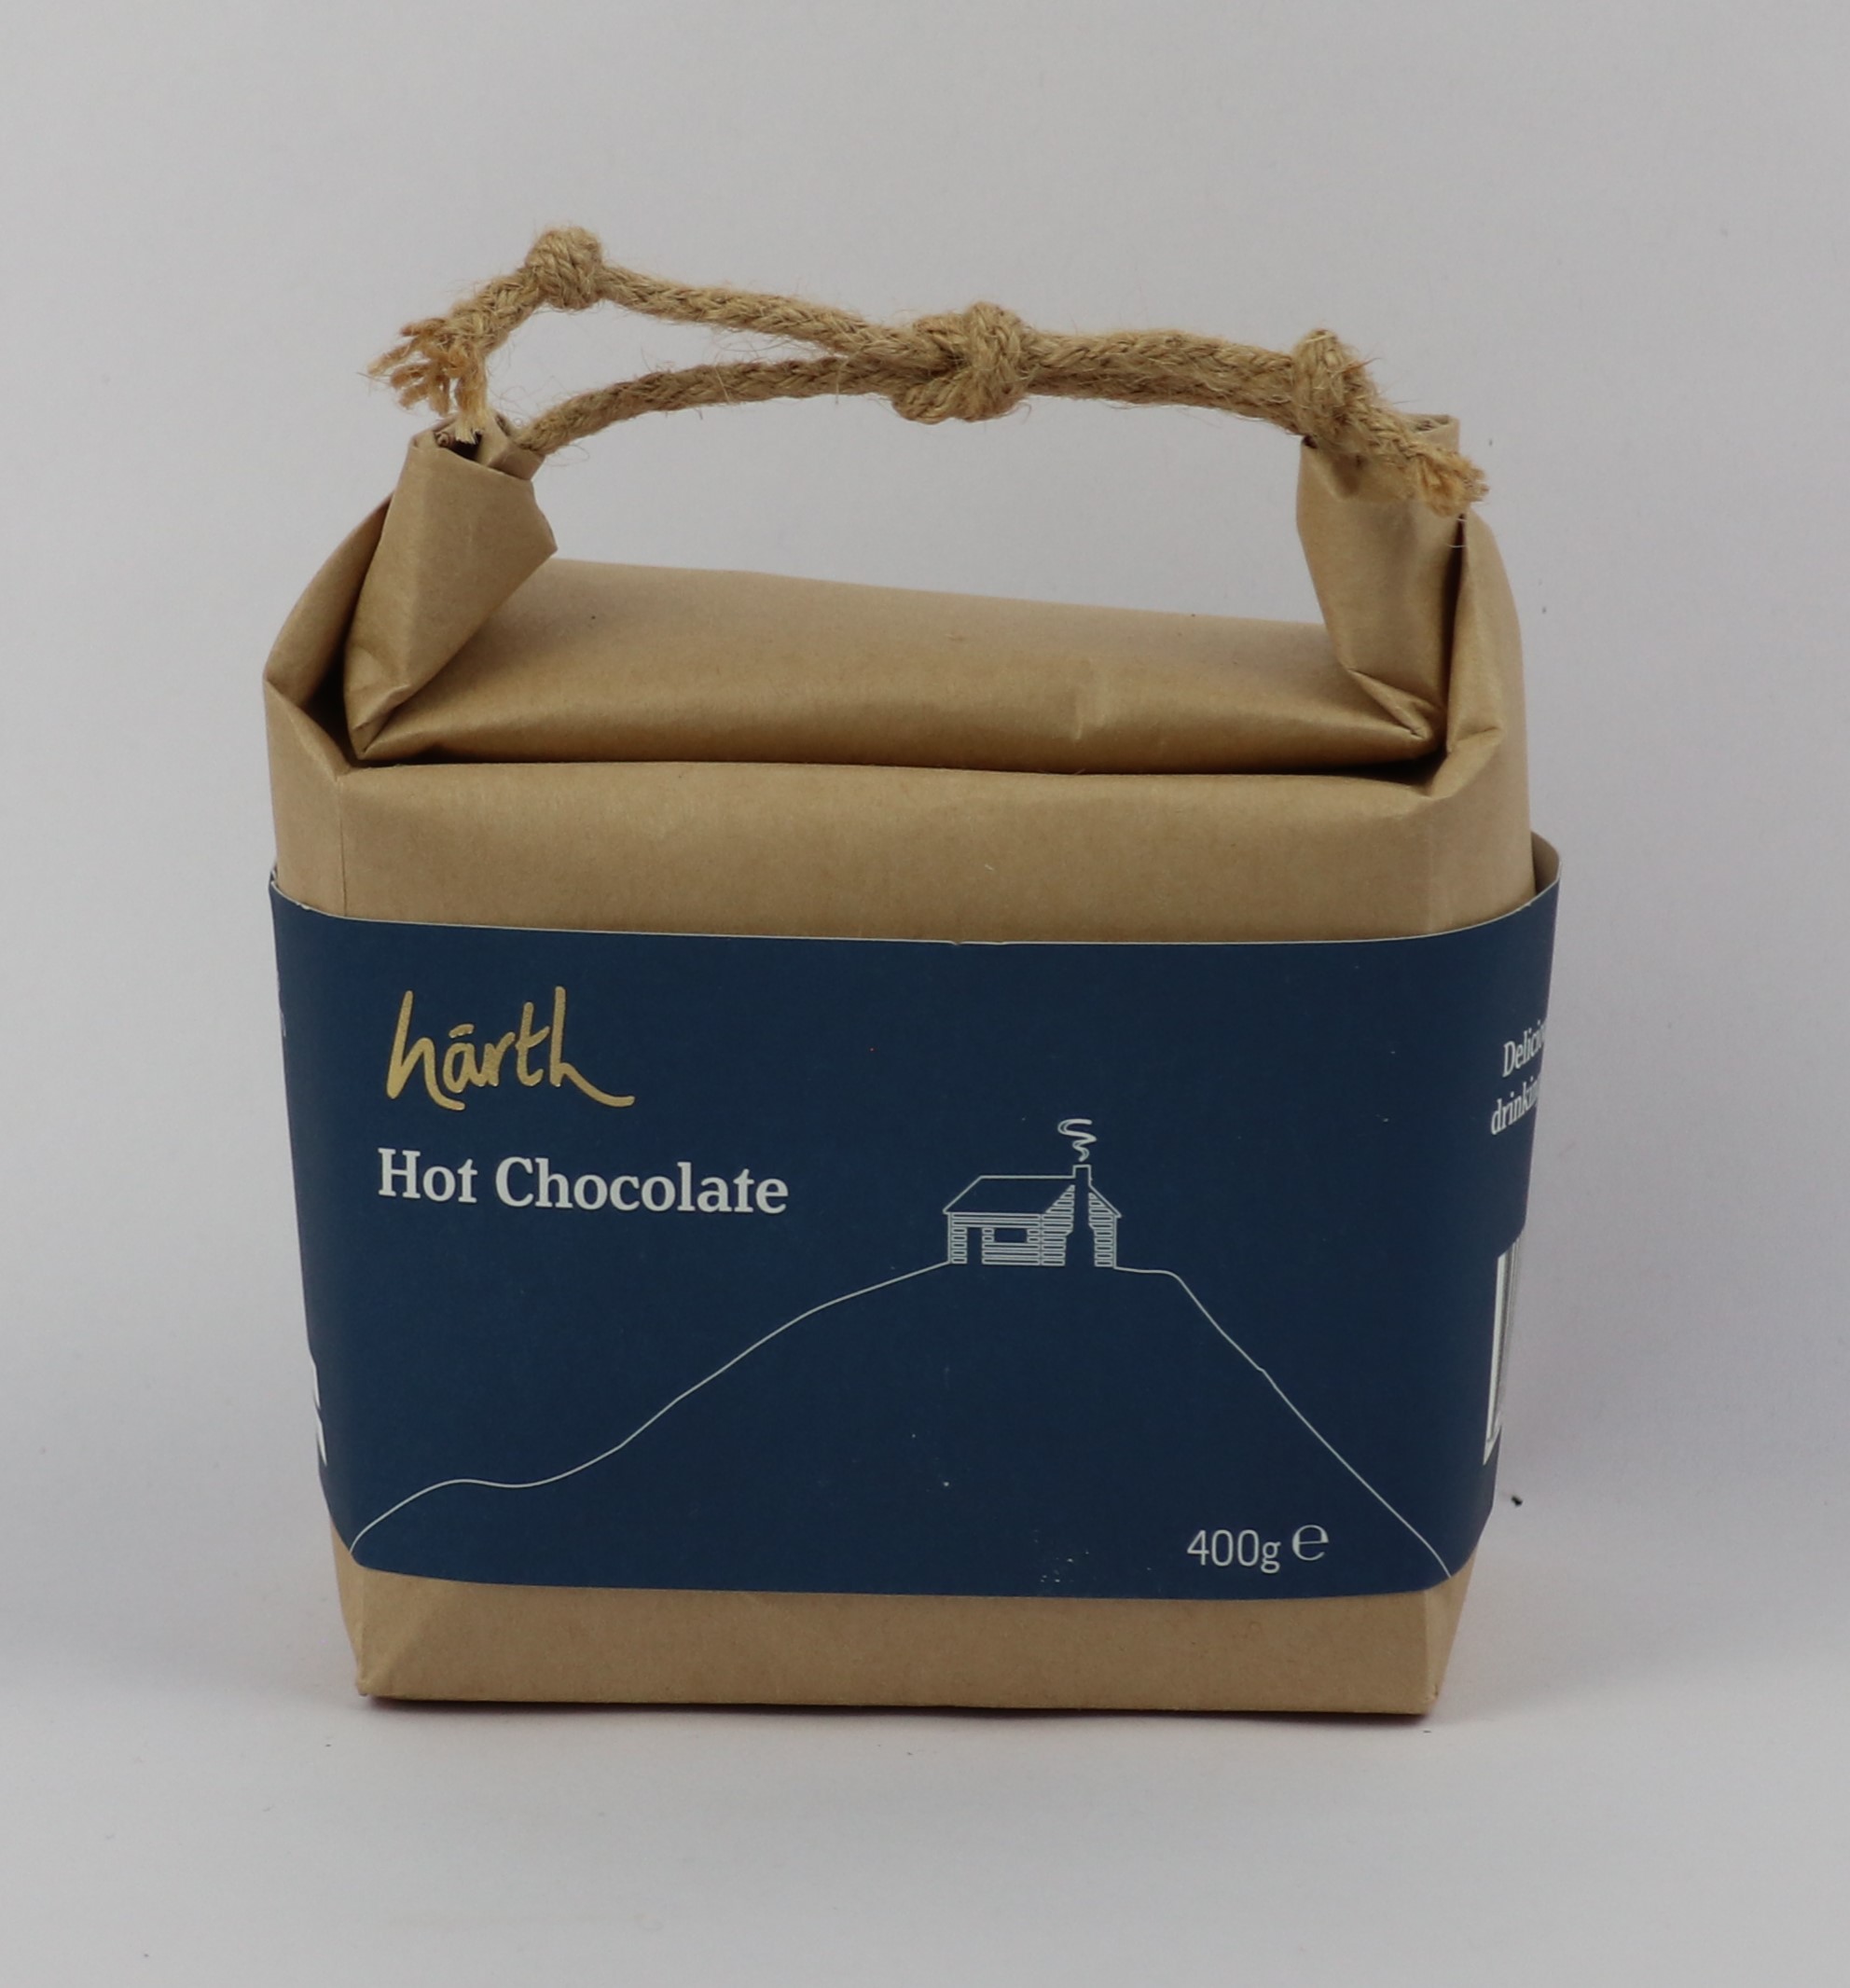 Harth Artisan Hot Chocolate - Original